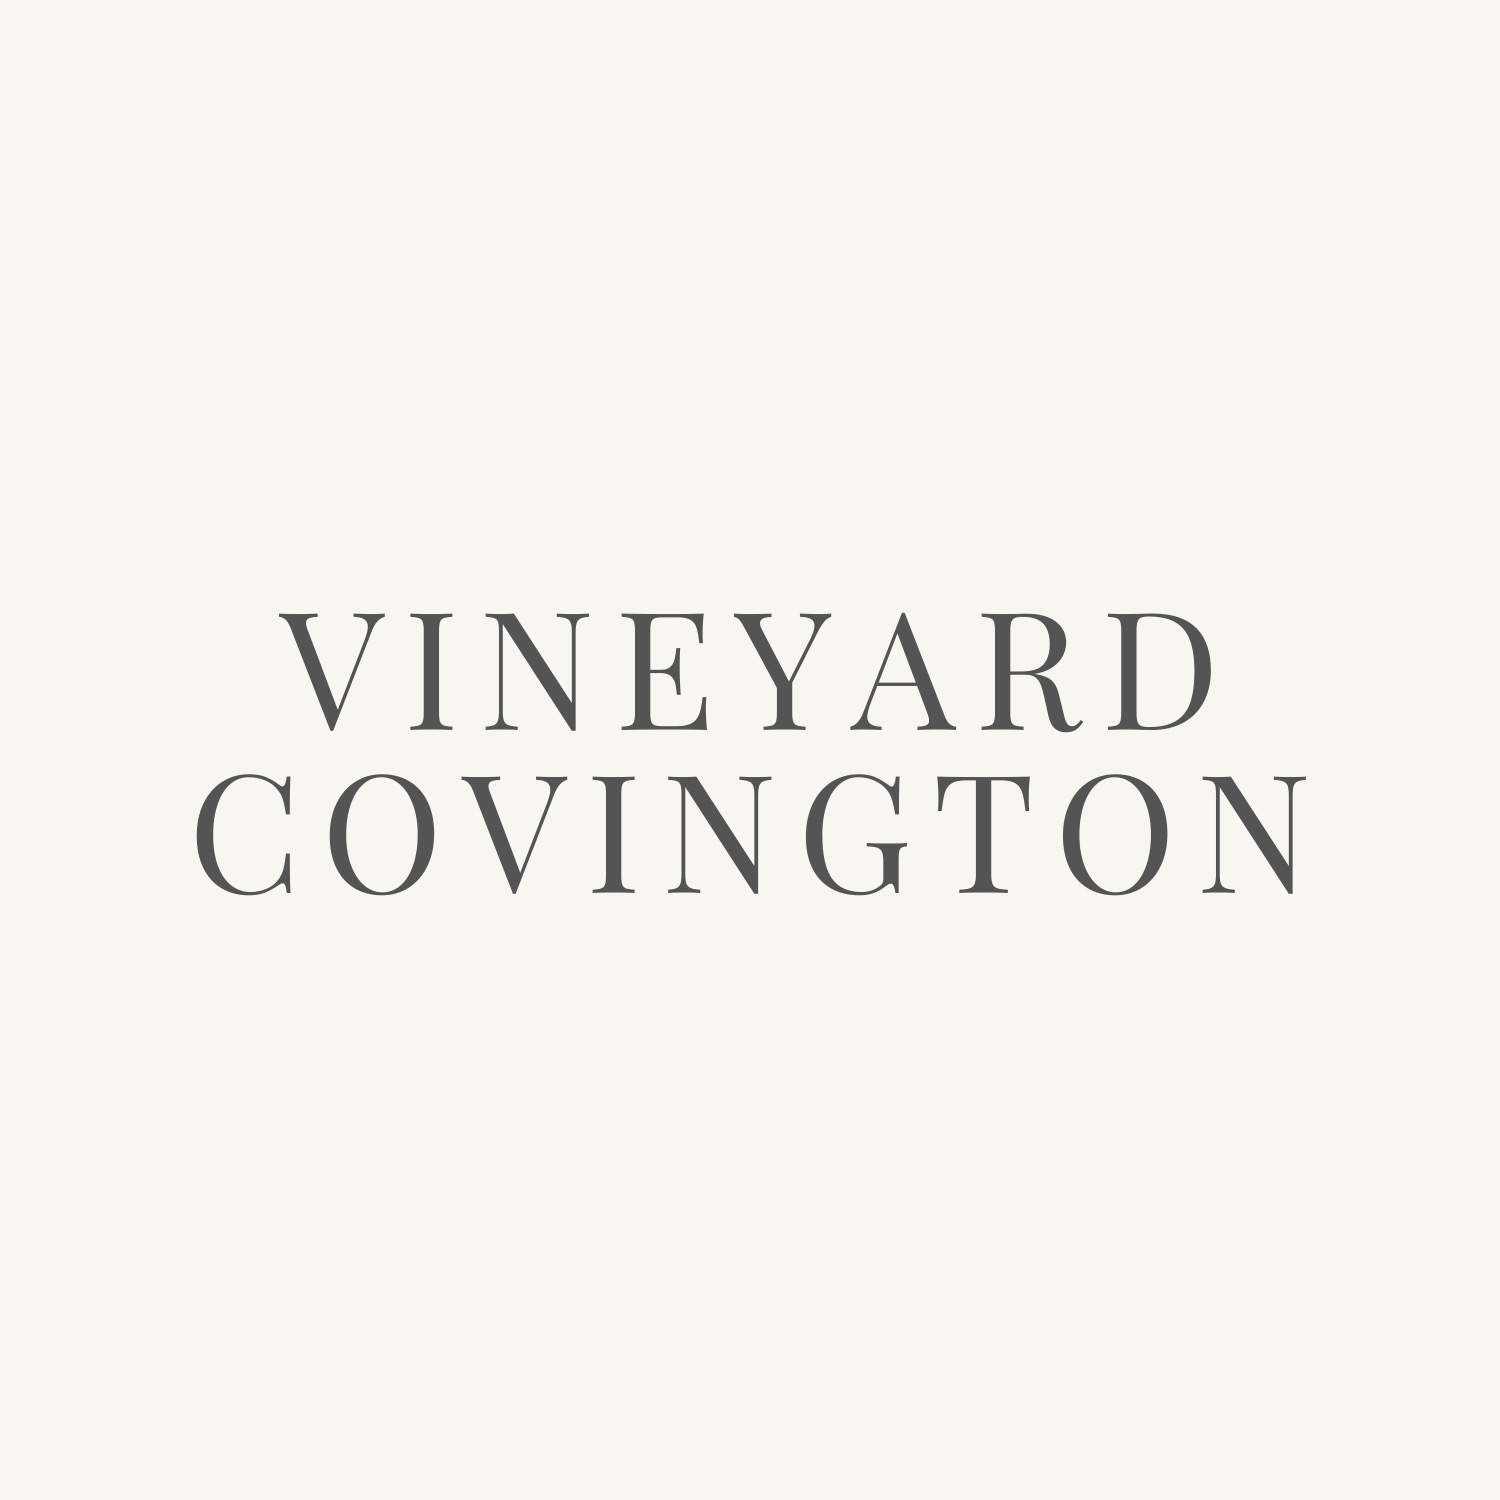 Vineyard Covington